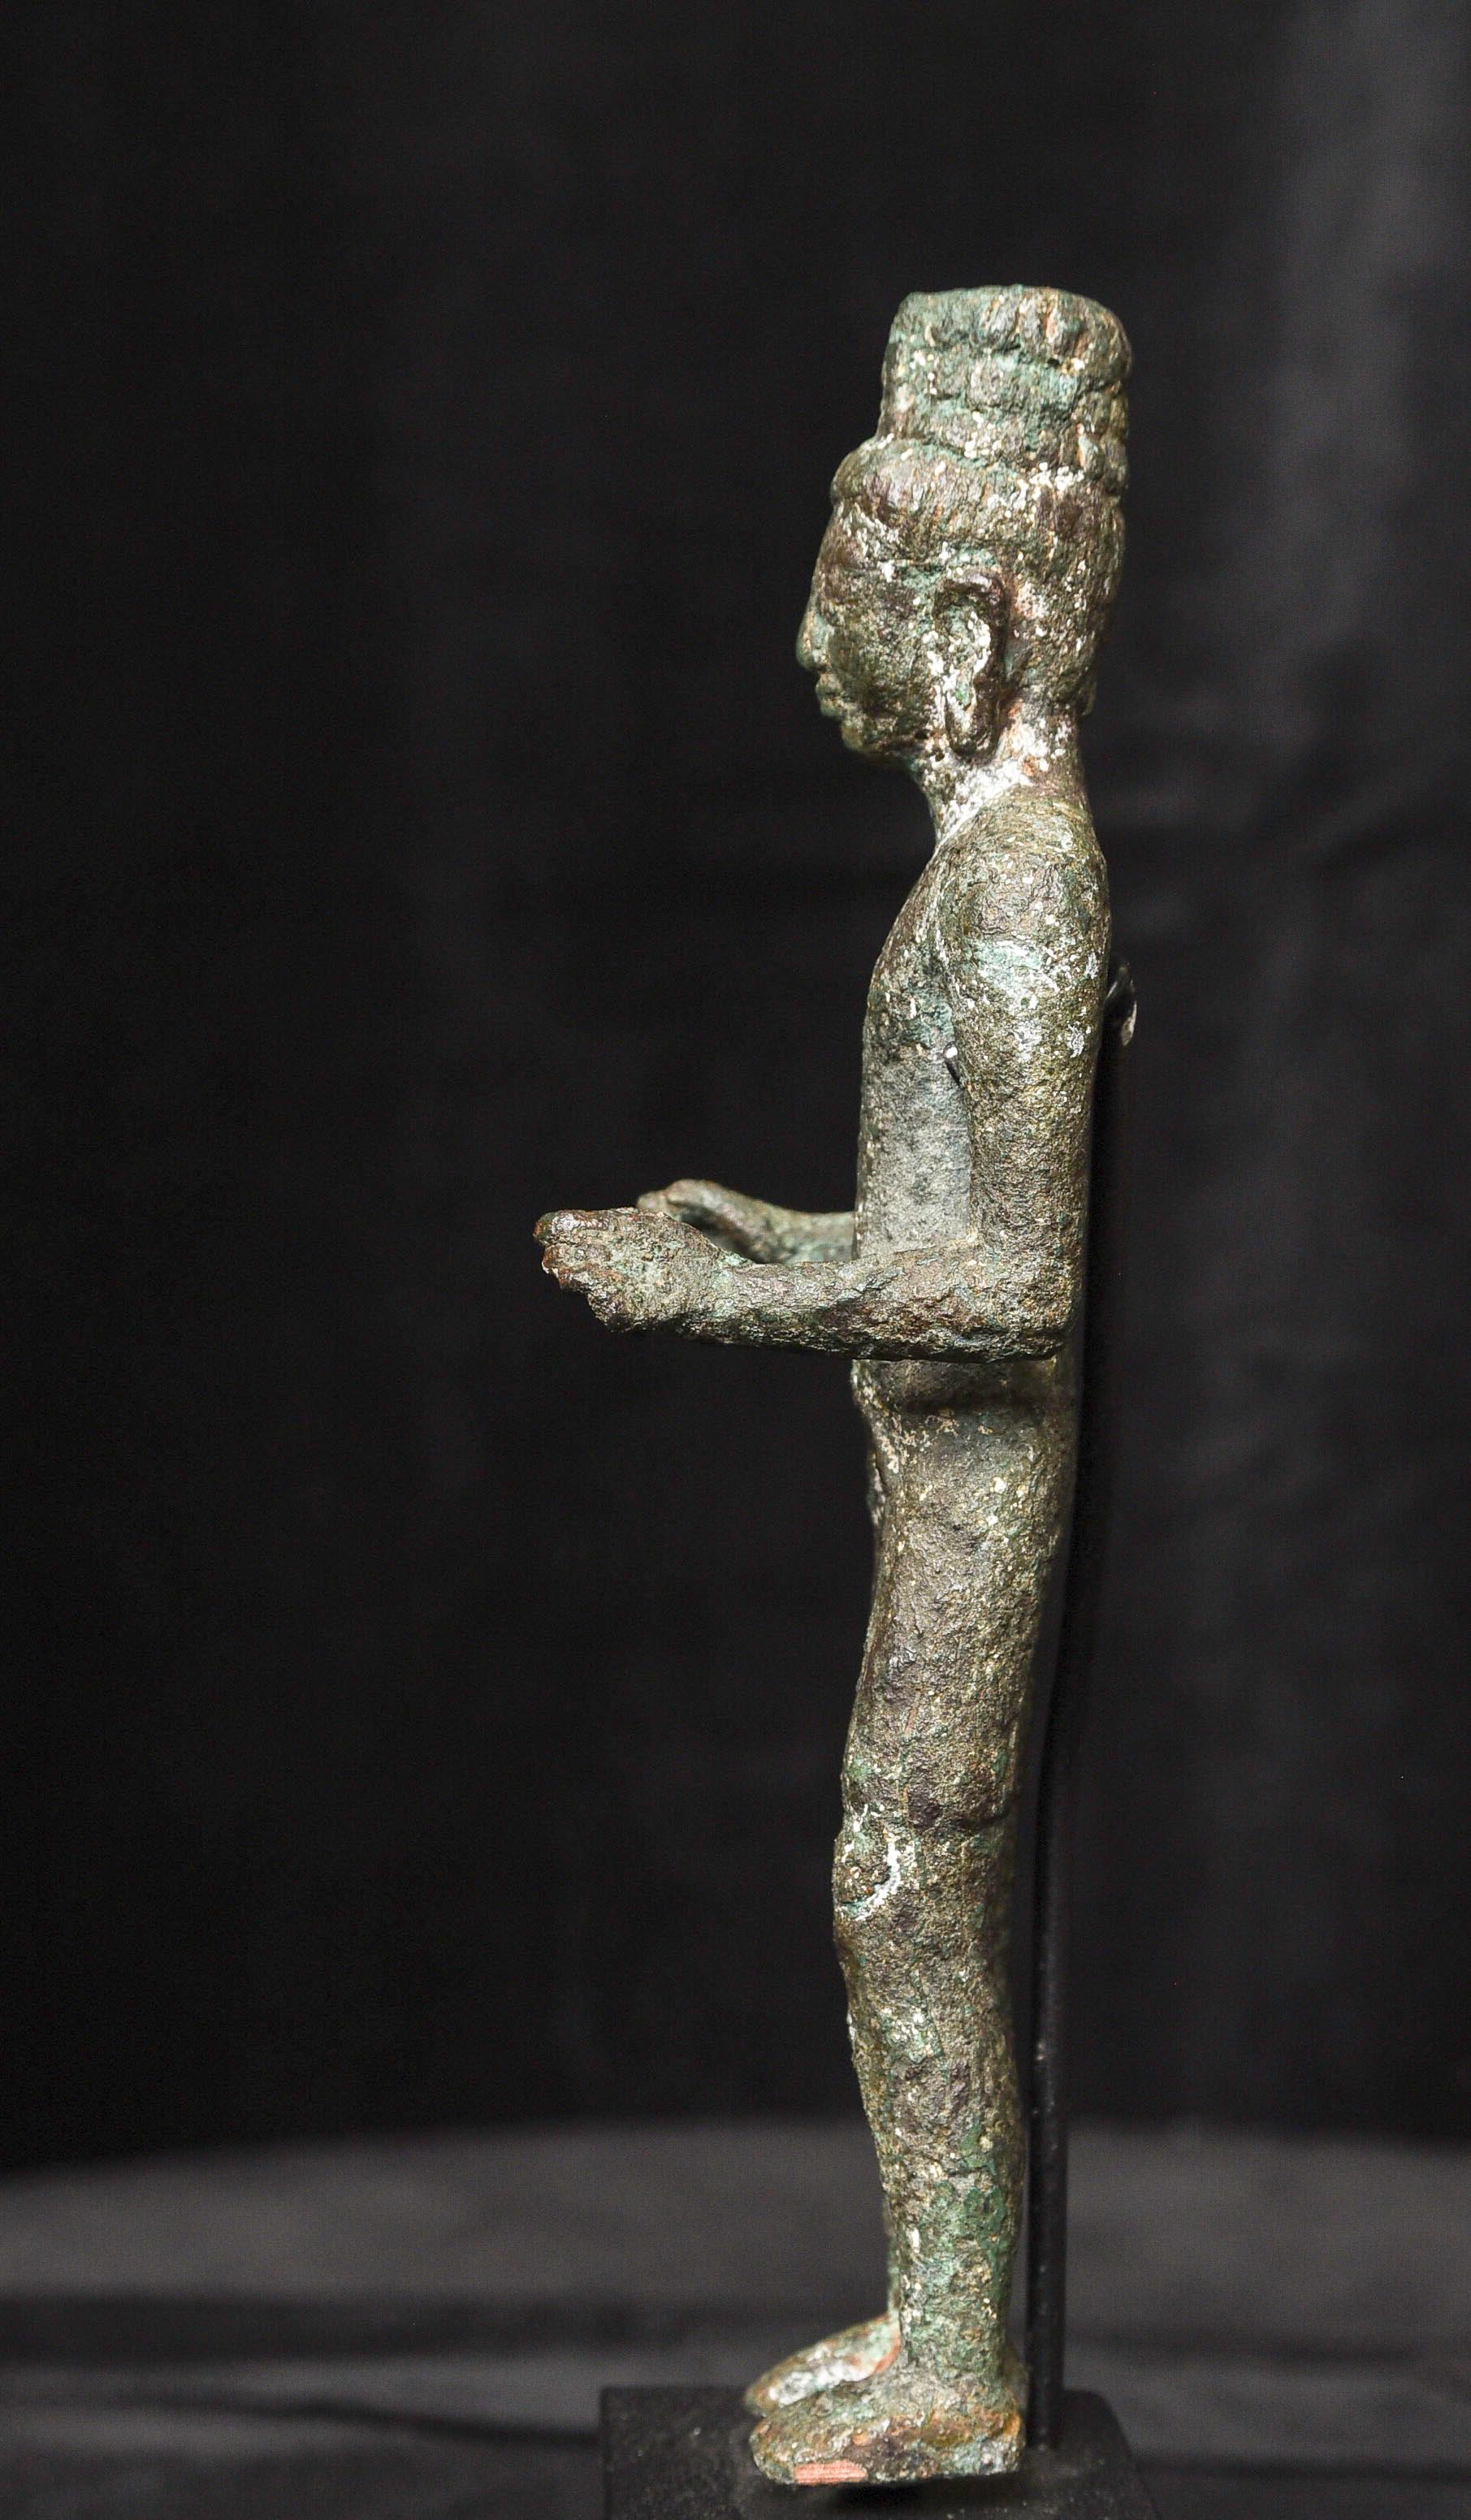 7th/9thC Solid-Cast Bronze Prakhon Chai Buddha or Bodhisattva - 9688 For Sale 3